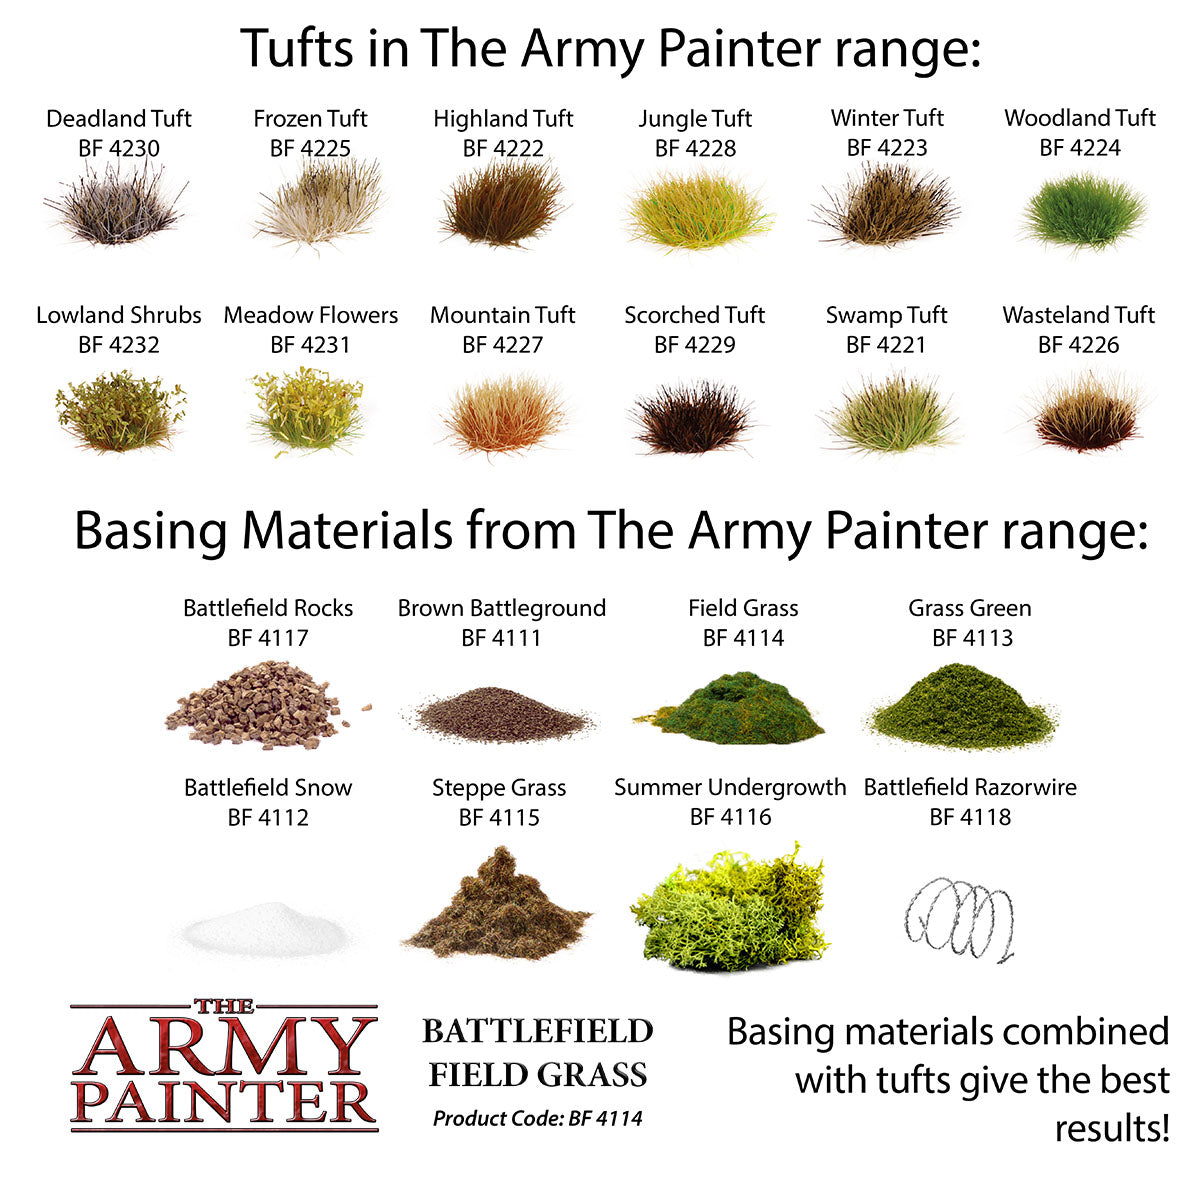 The Army Painter - Battlefield Field Grass BF4114